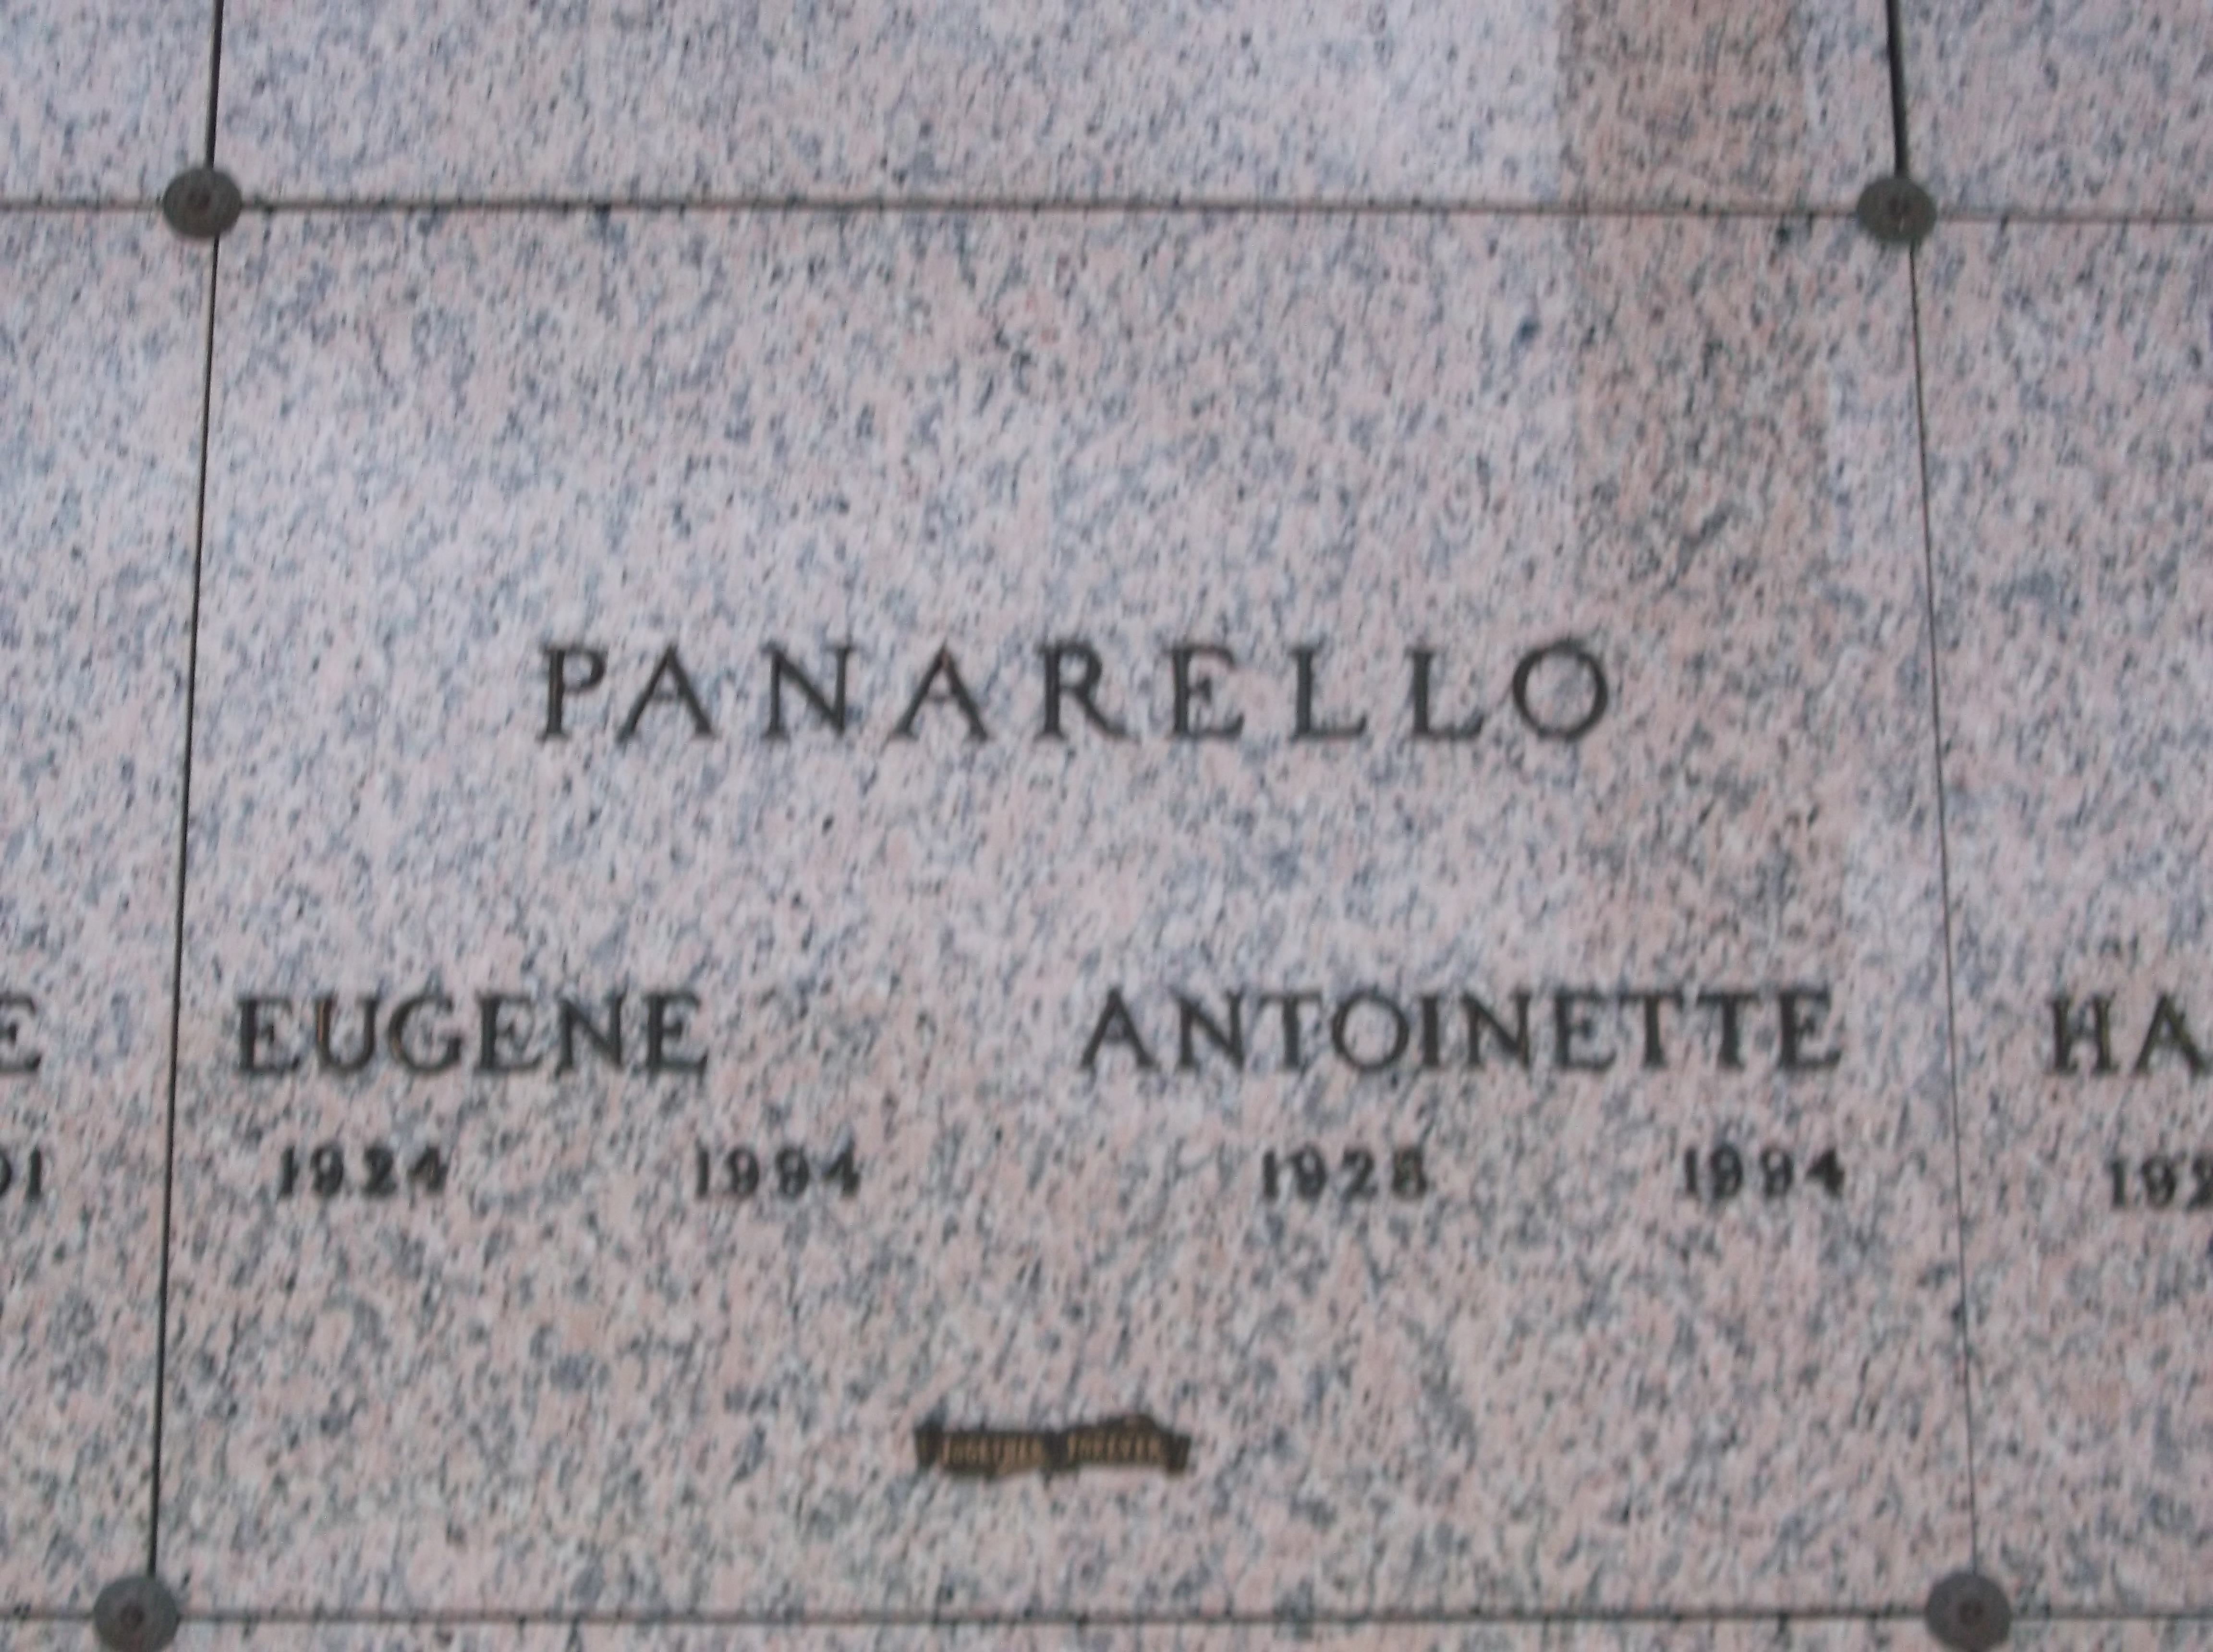 Eugene Panarello